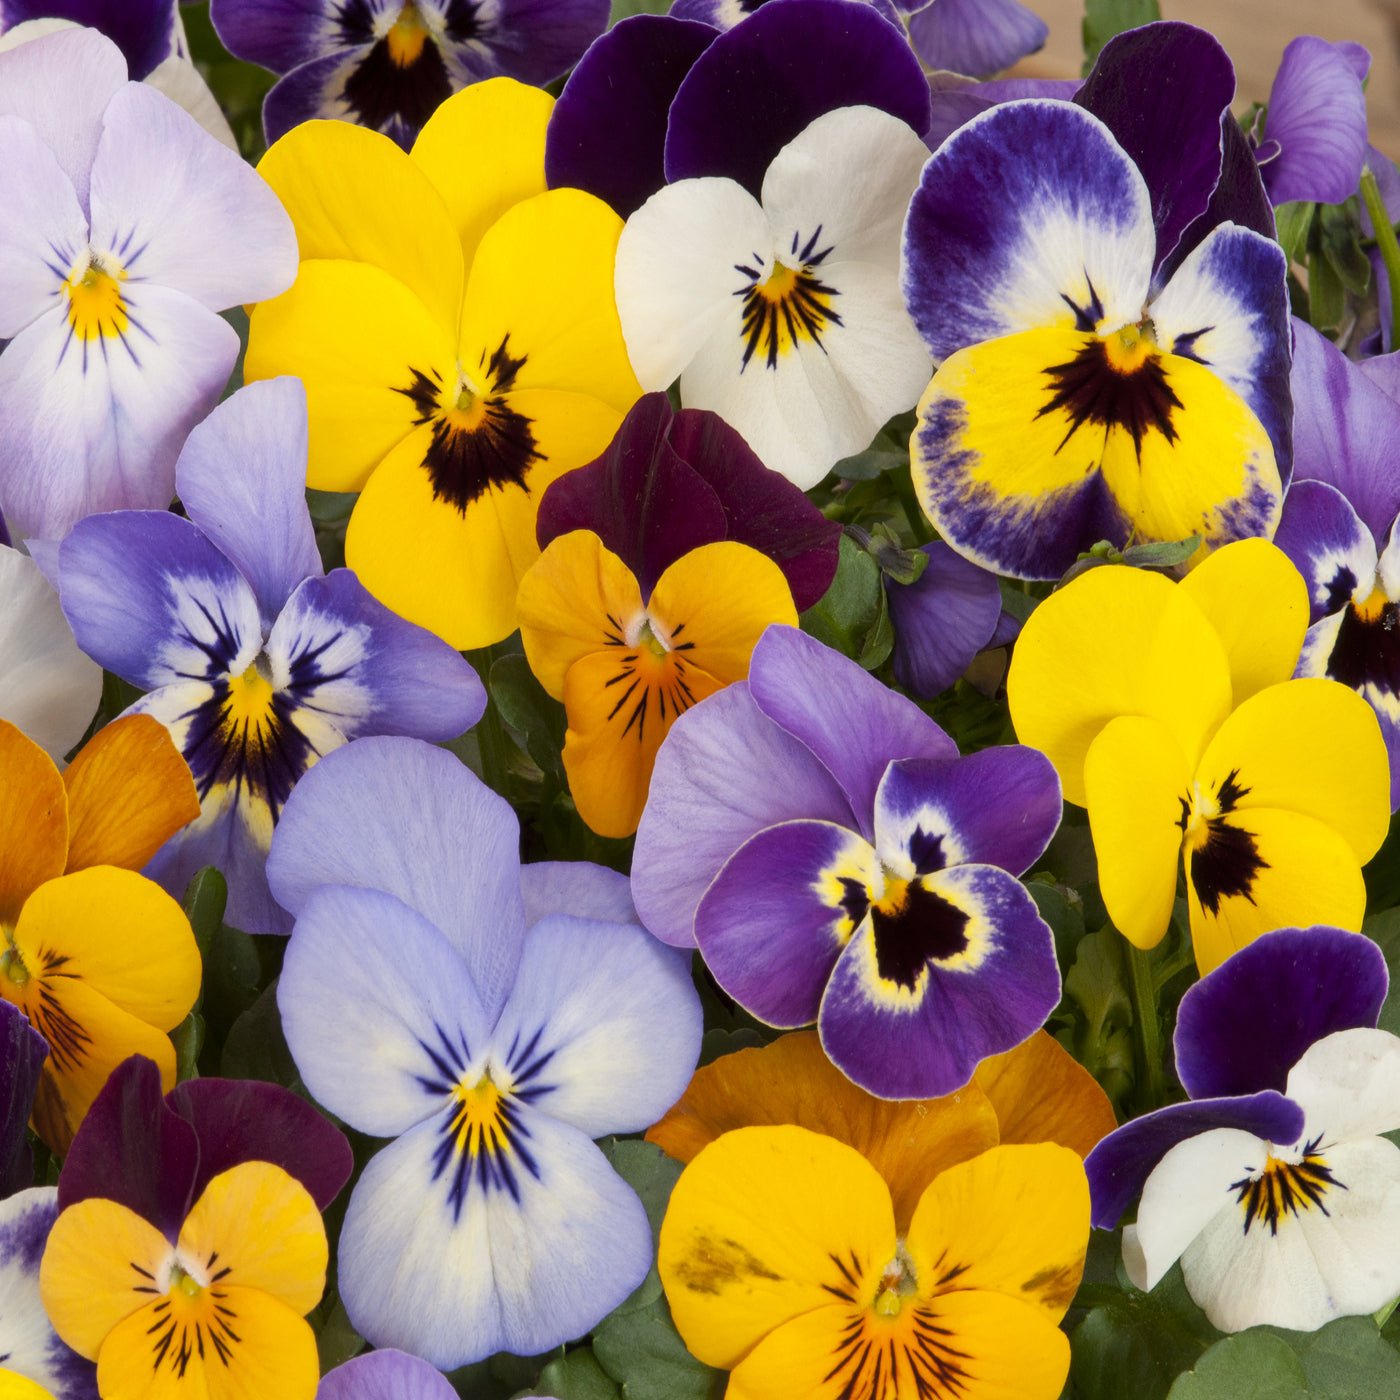 Viola Pansy Mix Seeds (Viola wittrockiana)